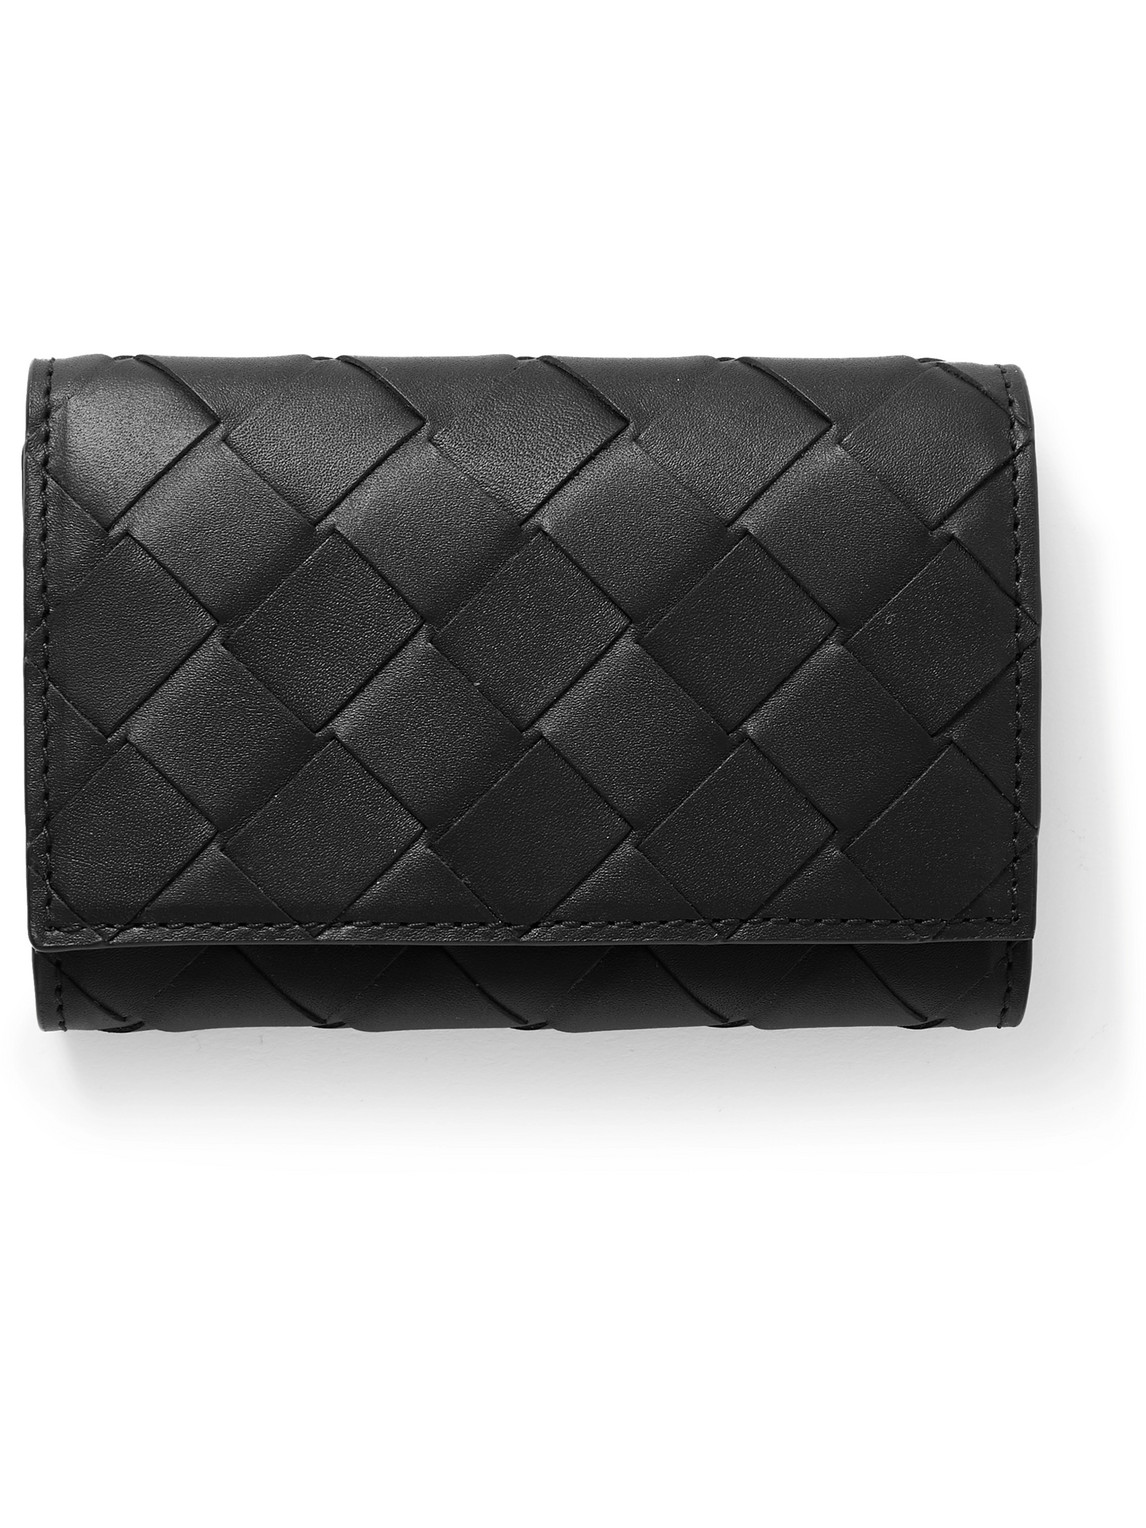 Bottega Veneta Intrecciato Leather Key Pouch In Black